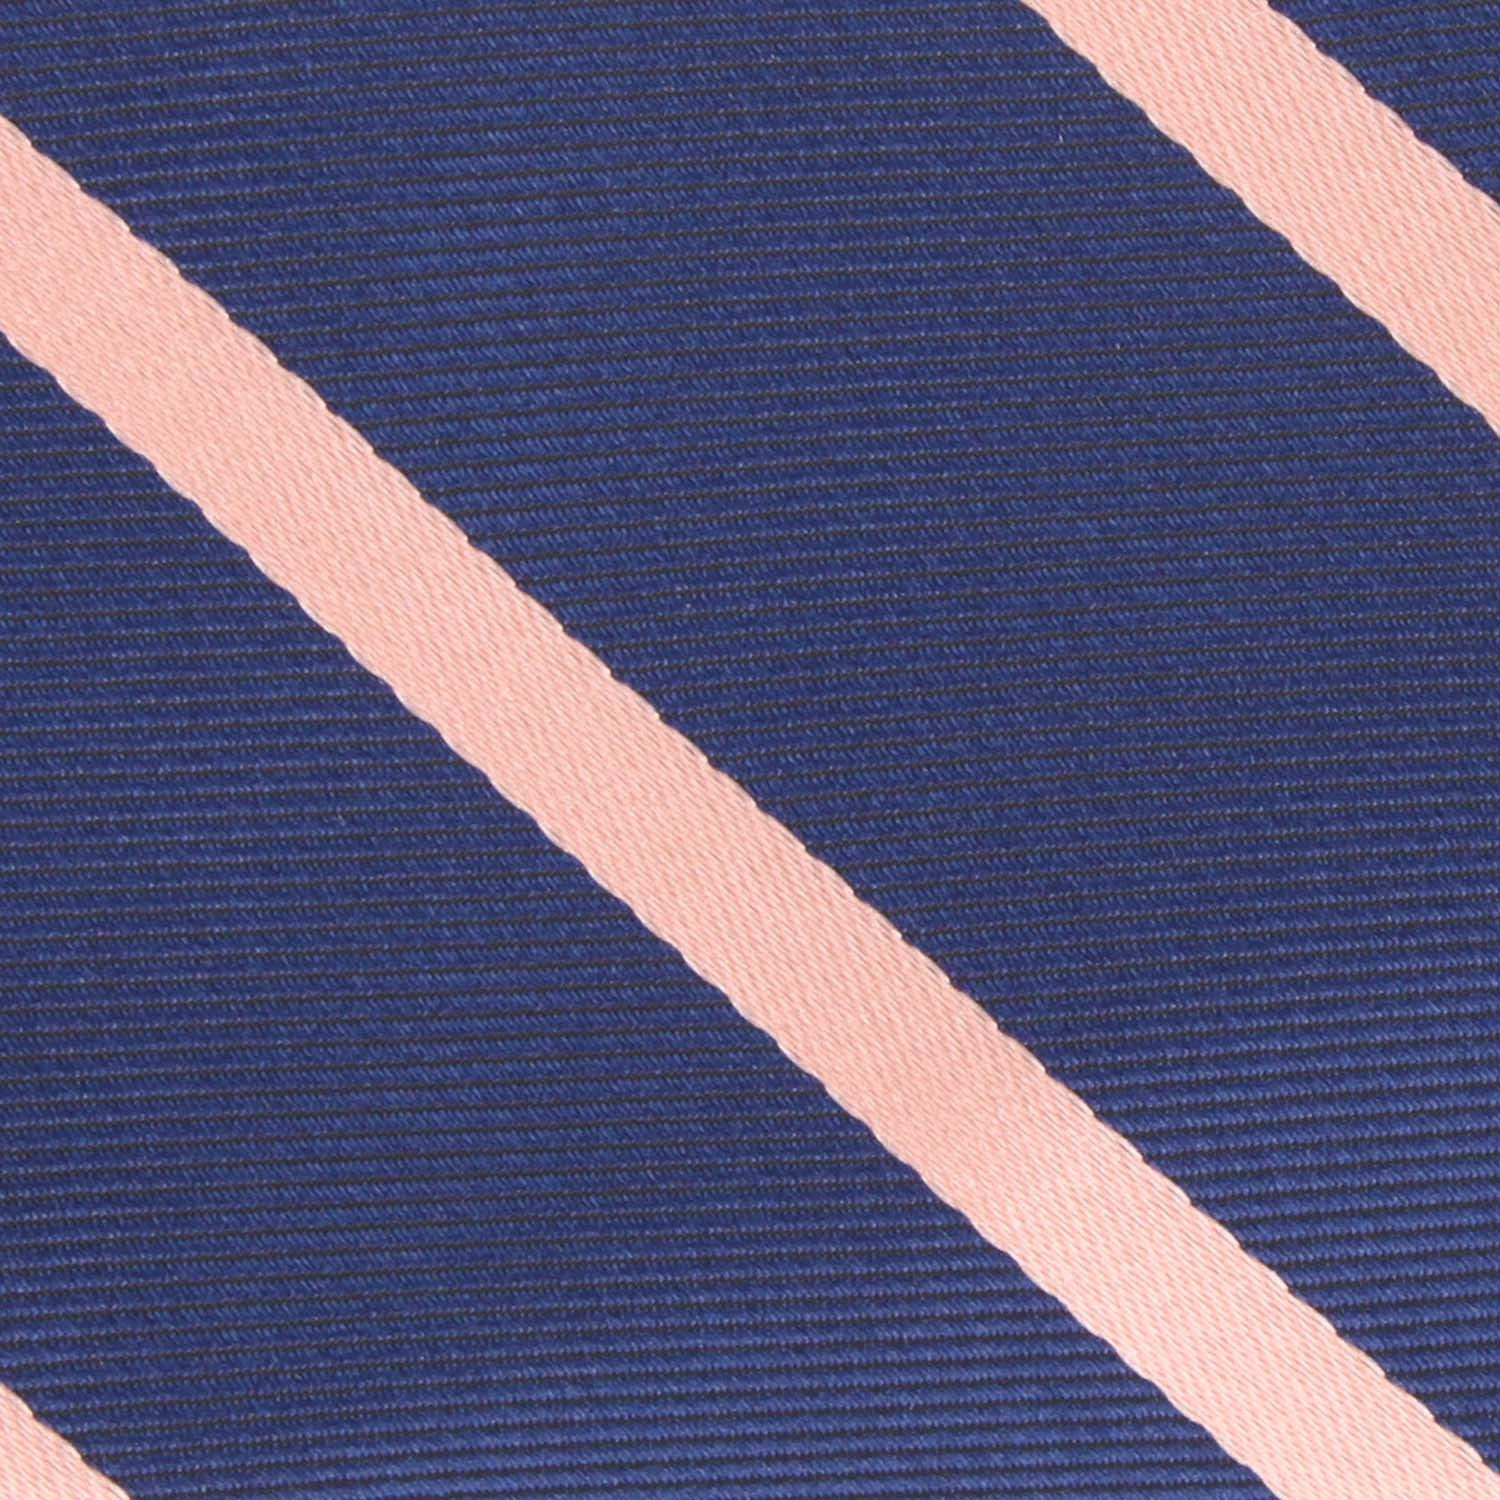 Navy Blue with Peach Stripes Fabric Necktie M152